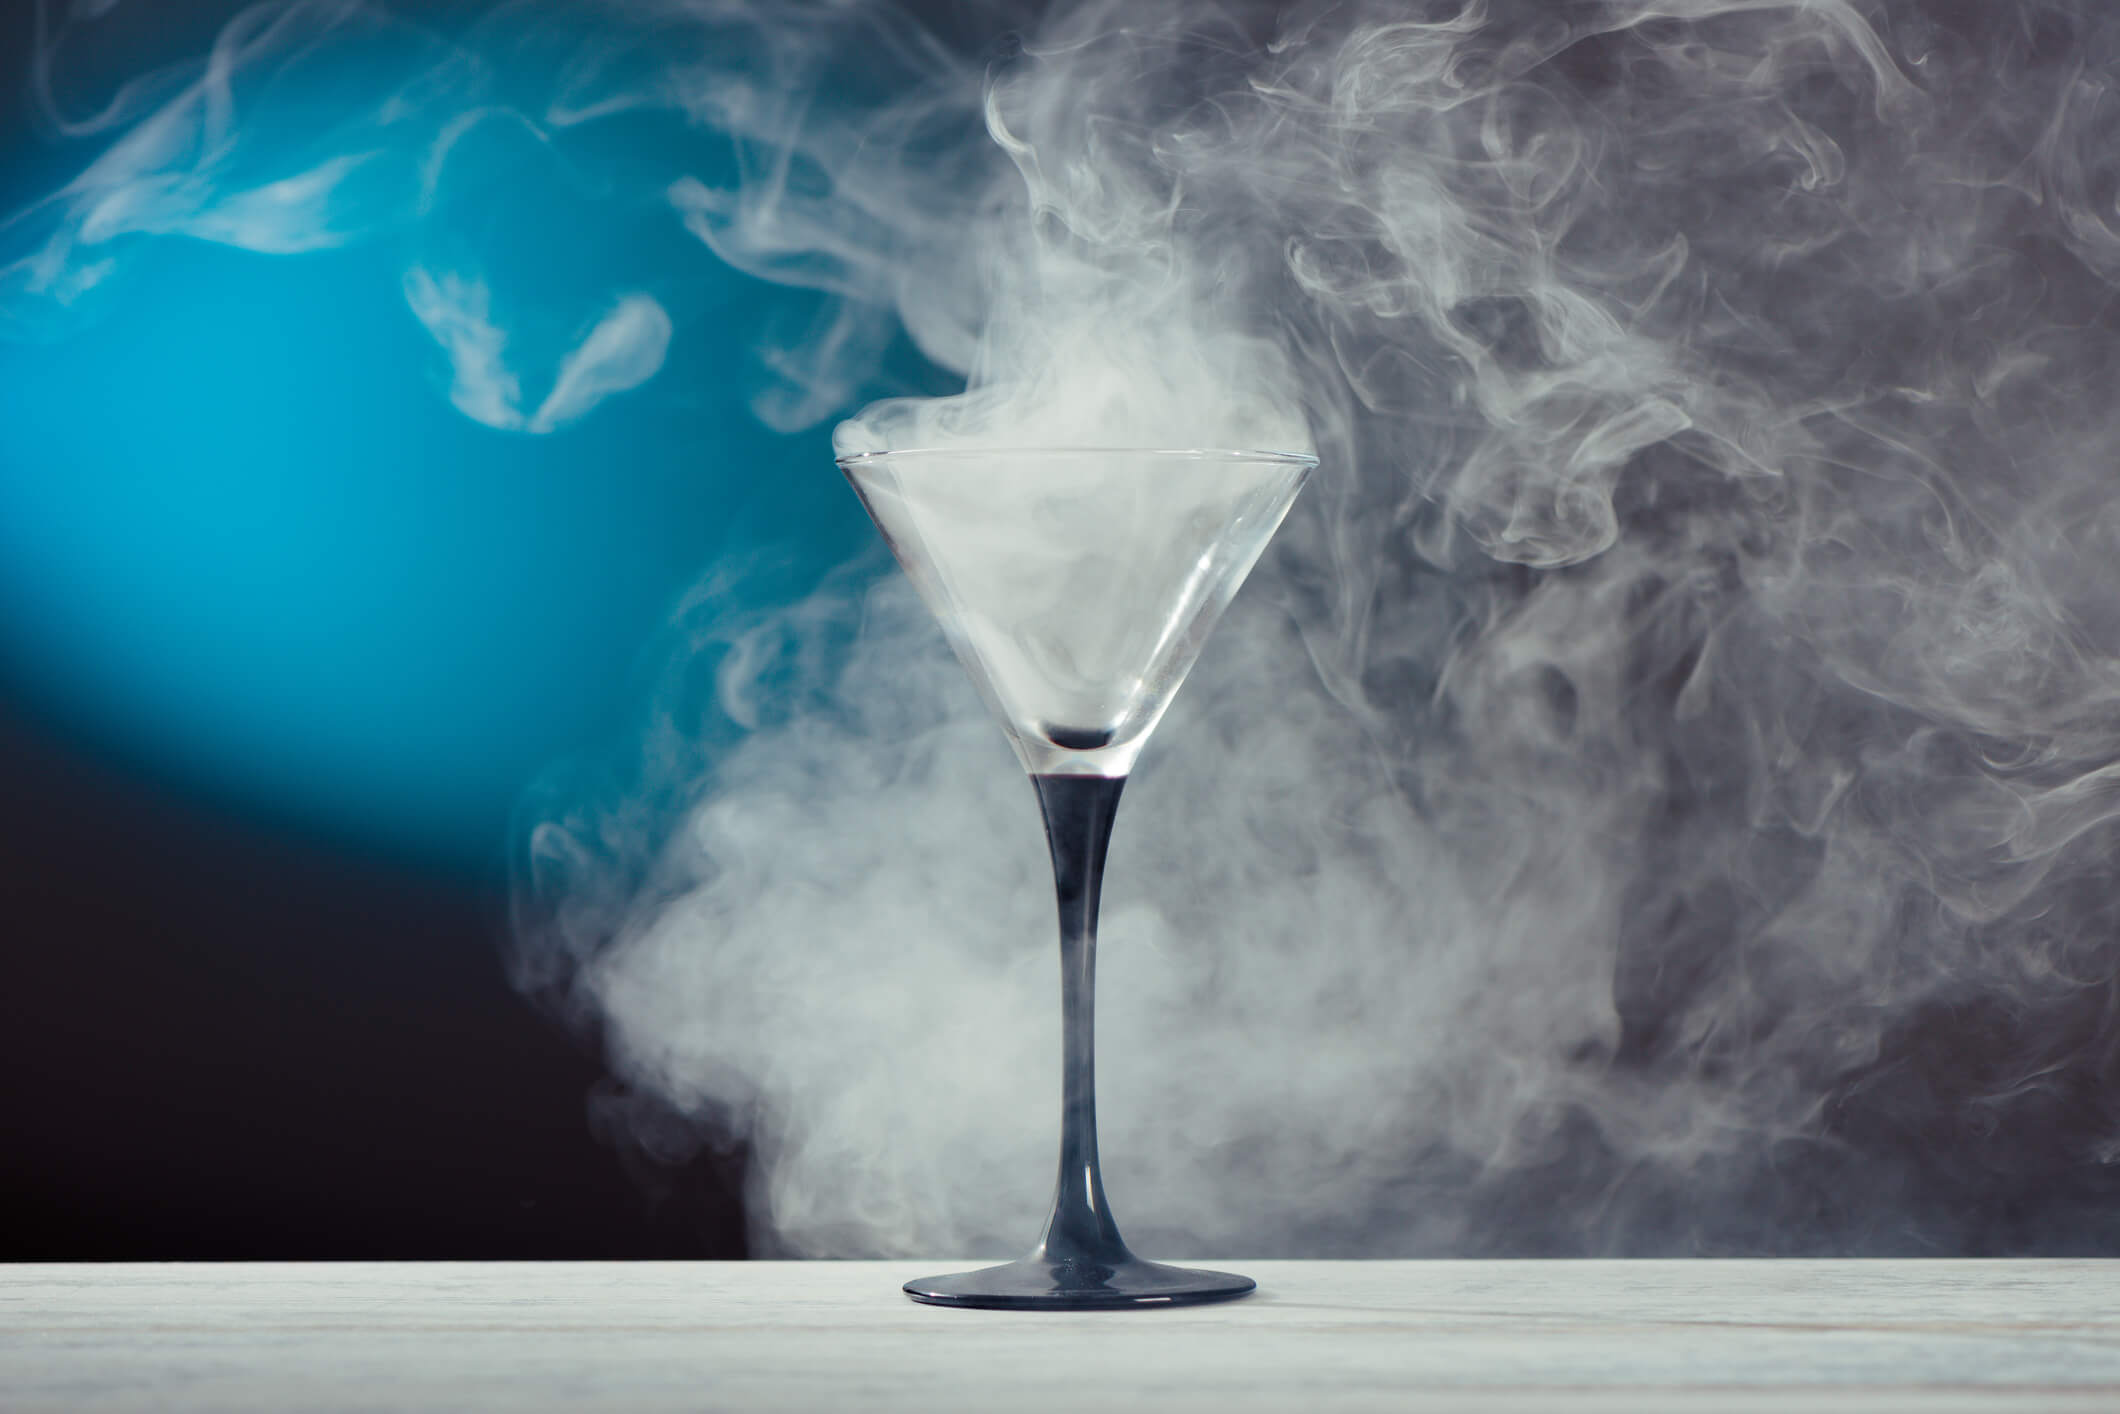 Smoke in a Martini glass